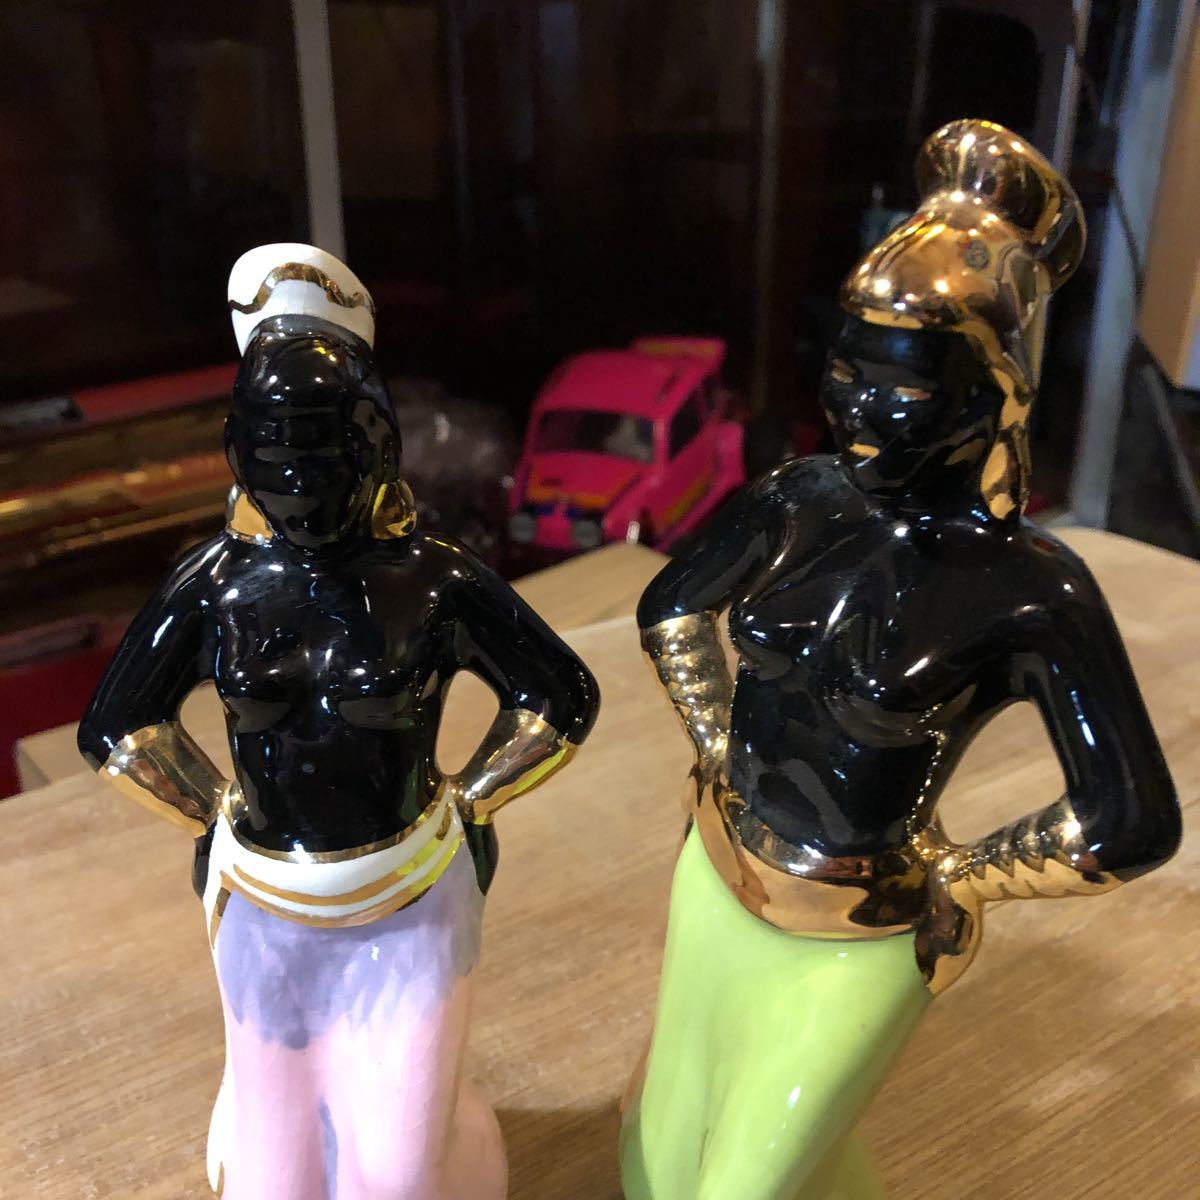  black person k Robot - woman 2 person Vintage doll antique goods ceramics made 